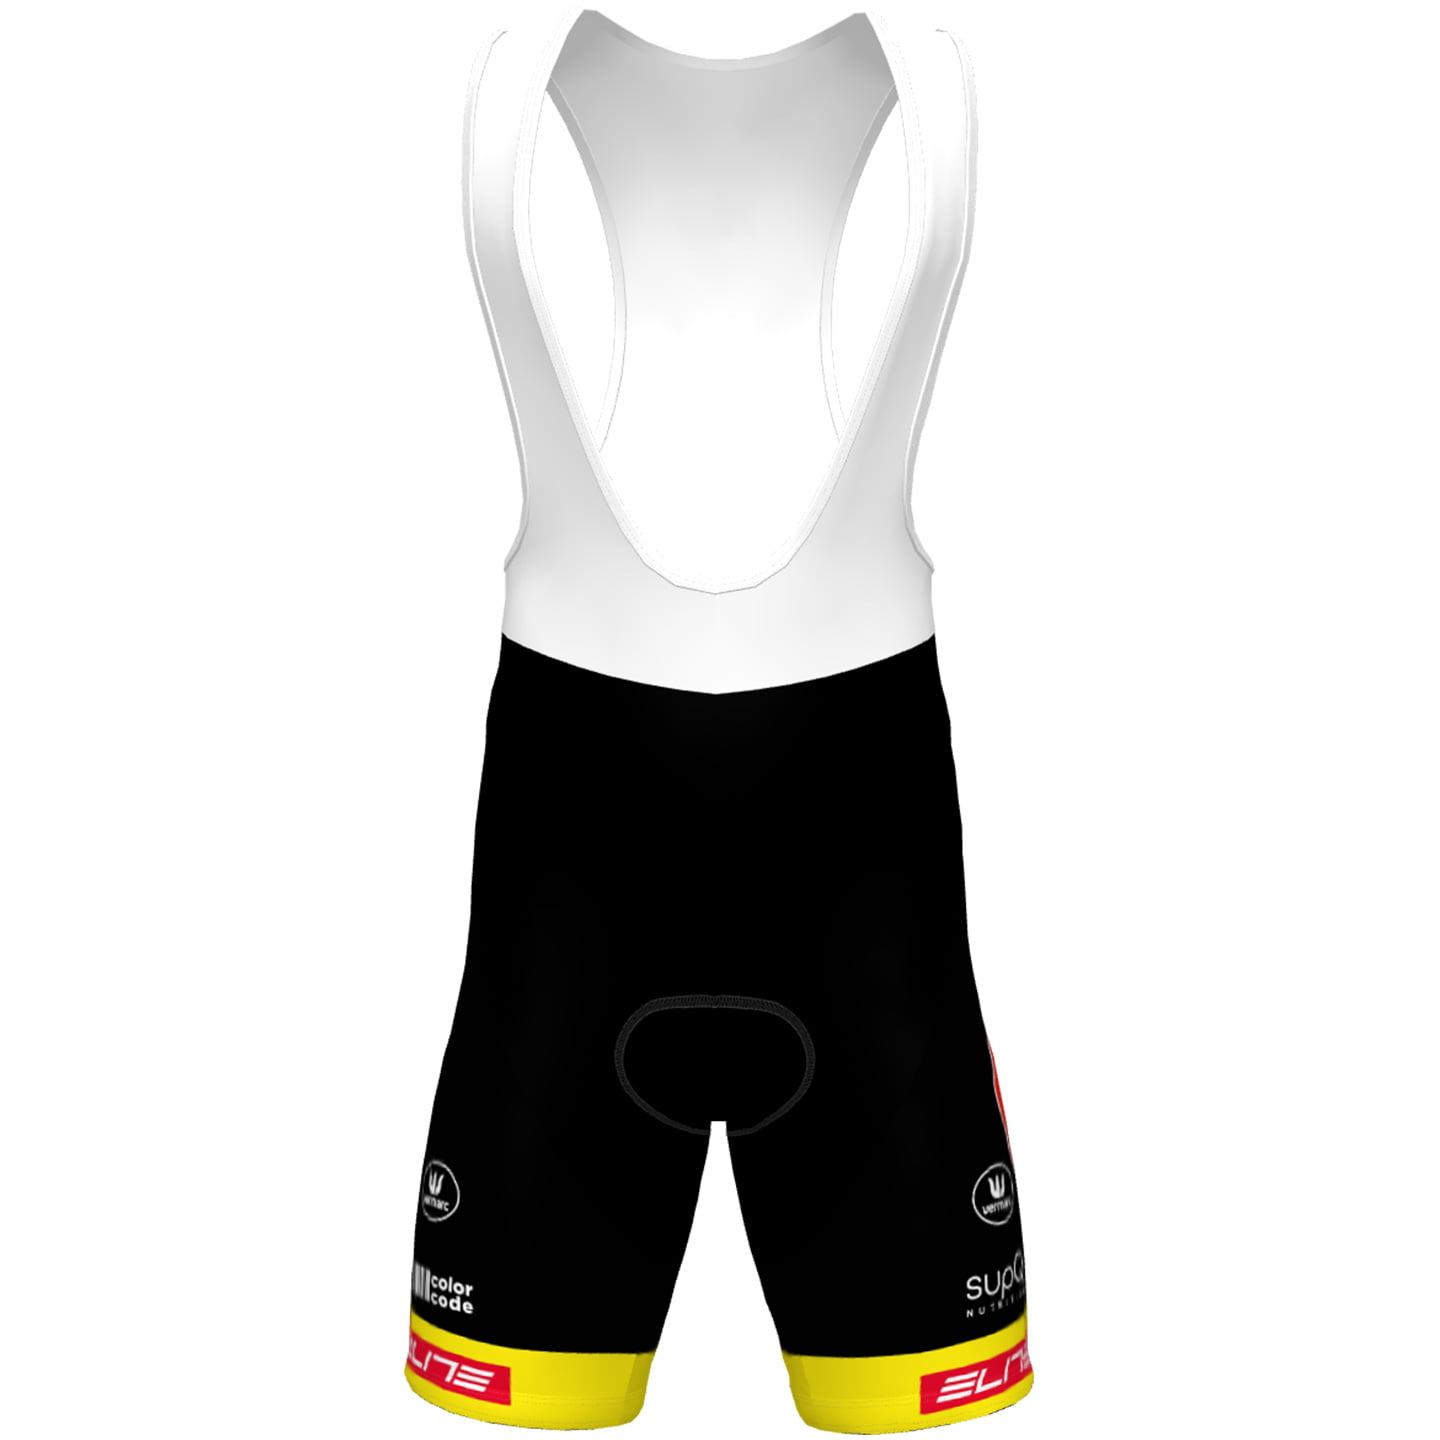 BINGOAL PAUWELS SAUCES WB 2022 Bib Shorts, for men, size S, Cycle shorts, Cycling clothing